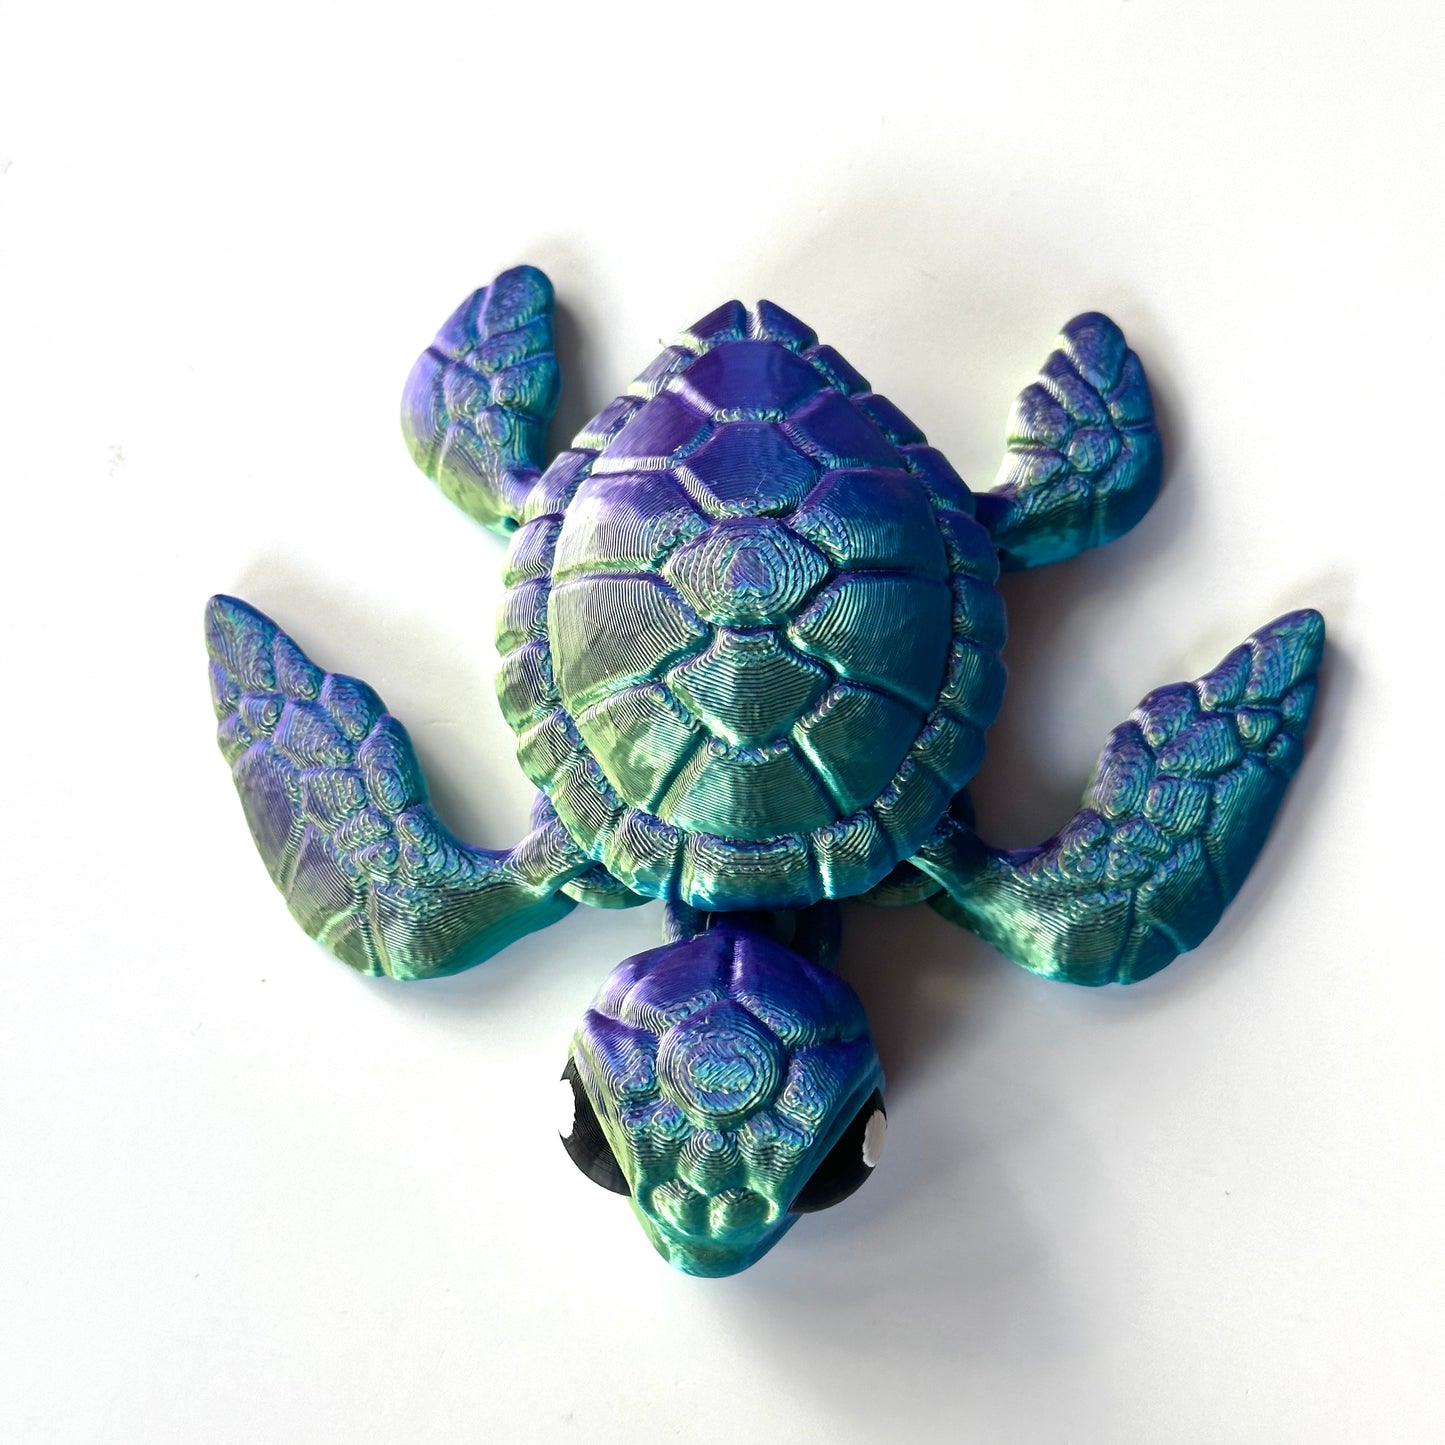 Sea Turtle - 3D Printed Articulating Figure